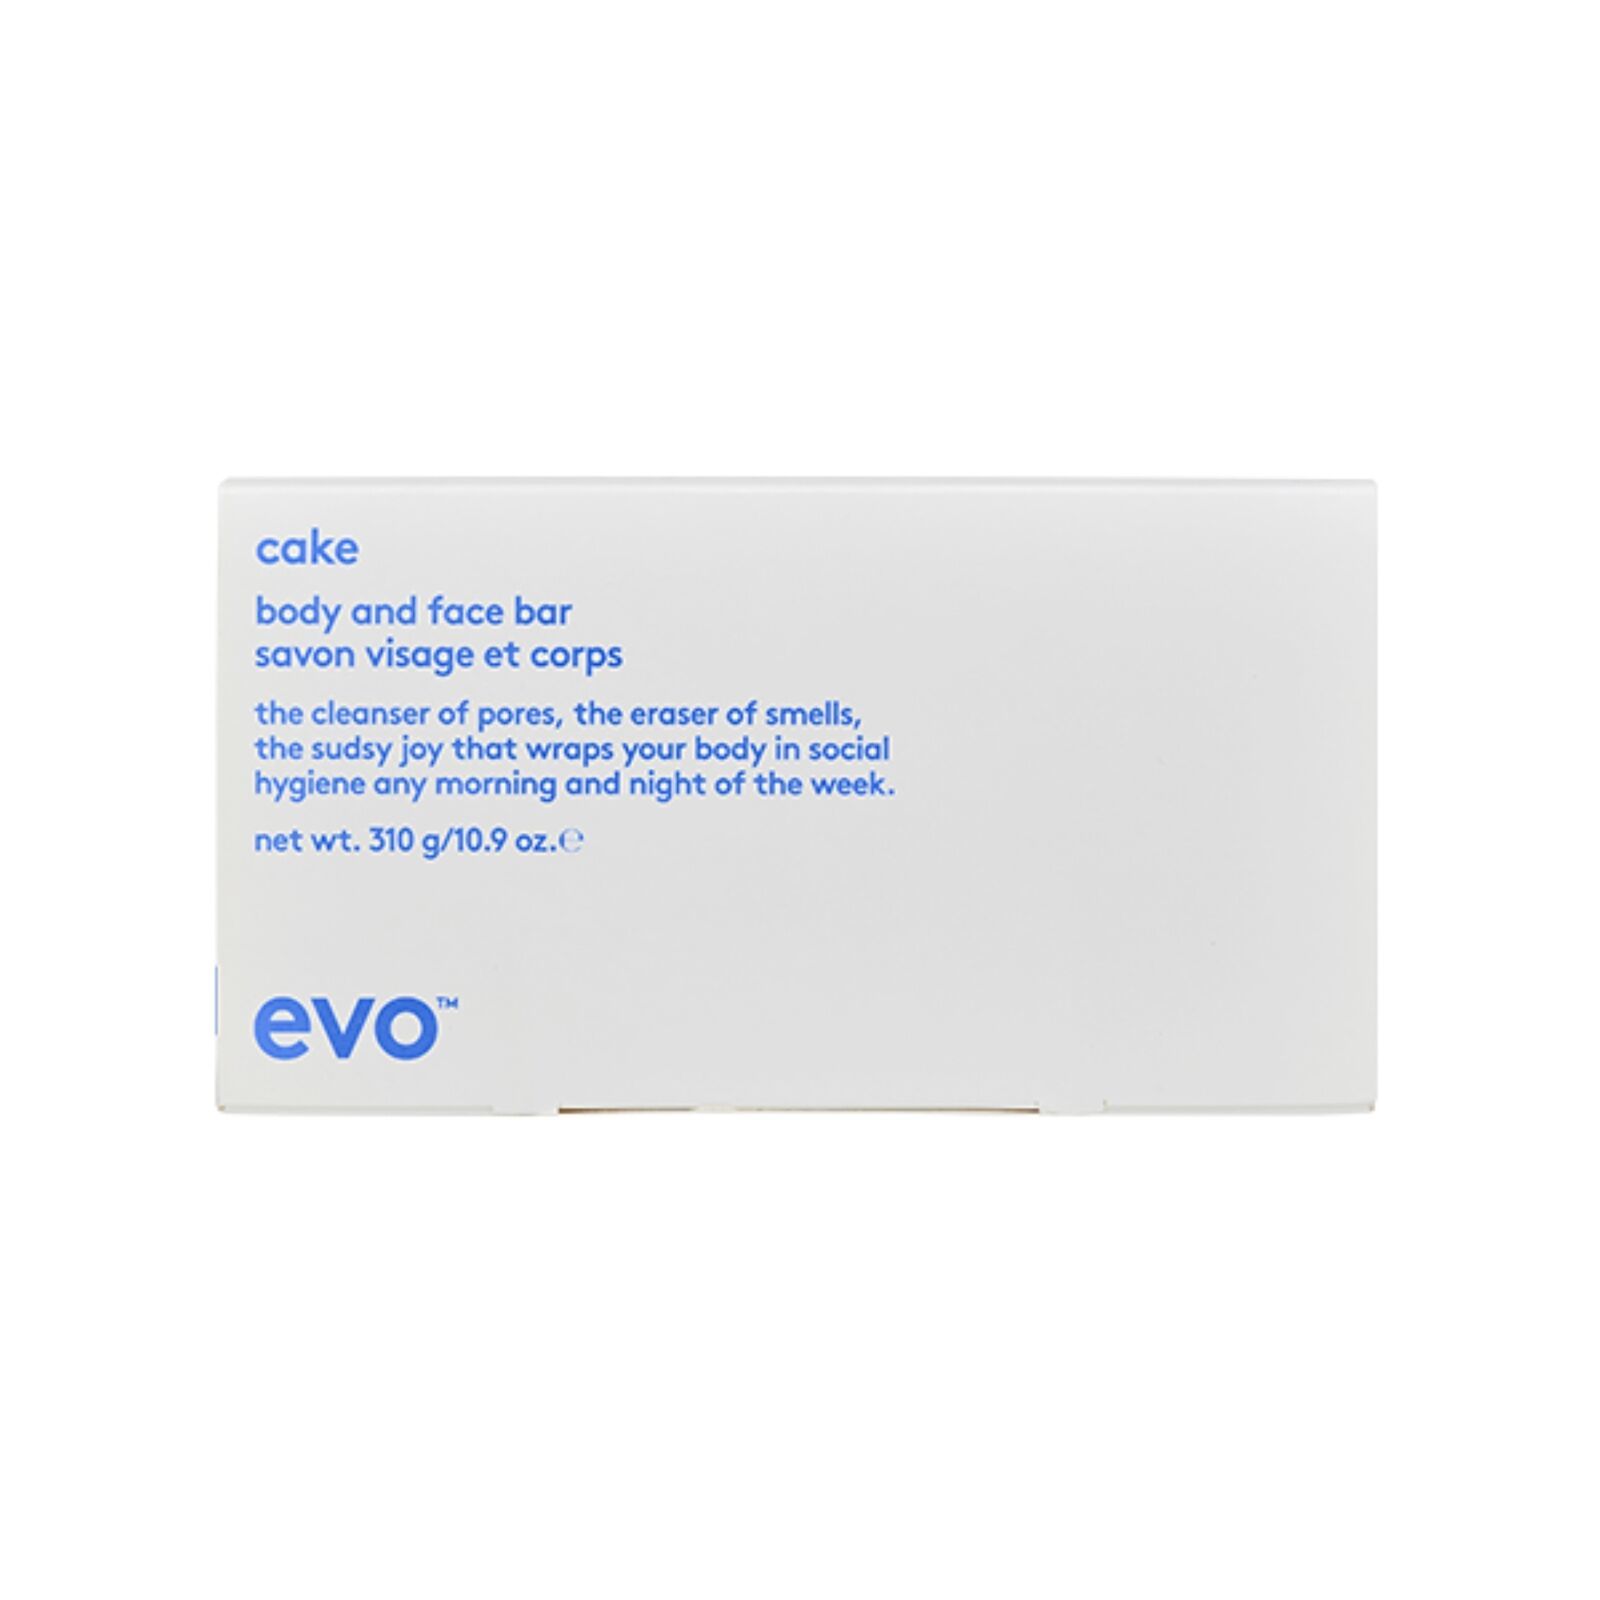 EVO cake body and face bar, 10.9 Oz - $27.60